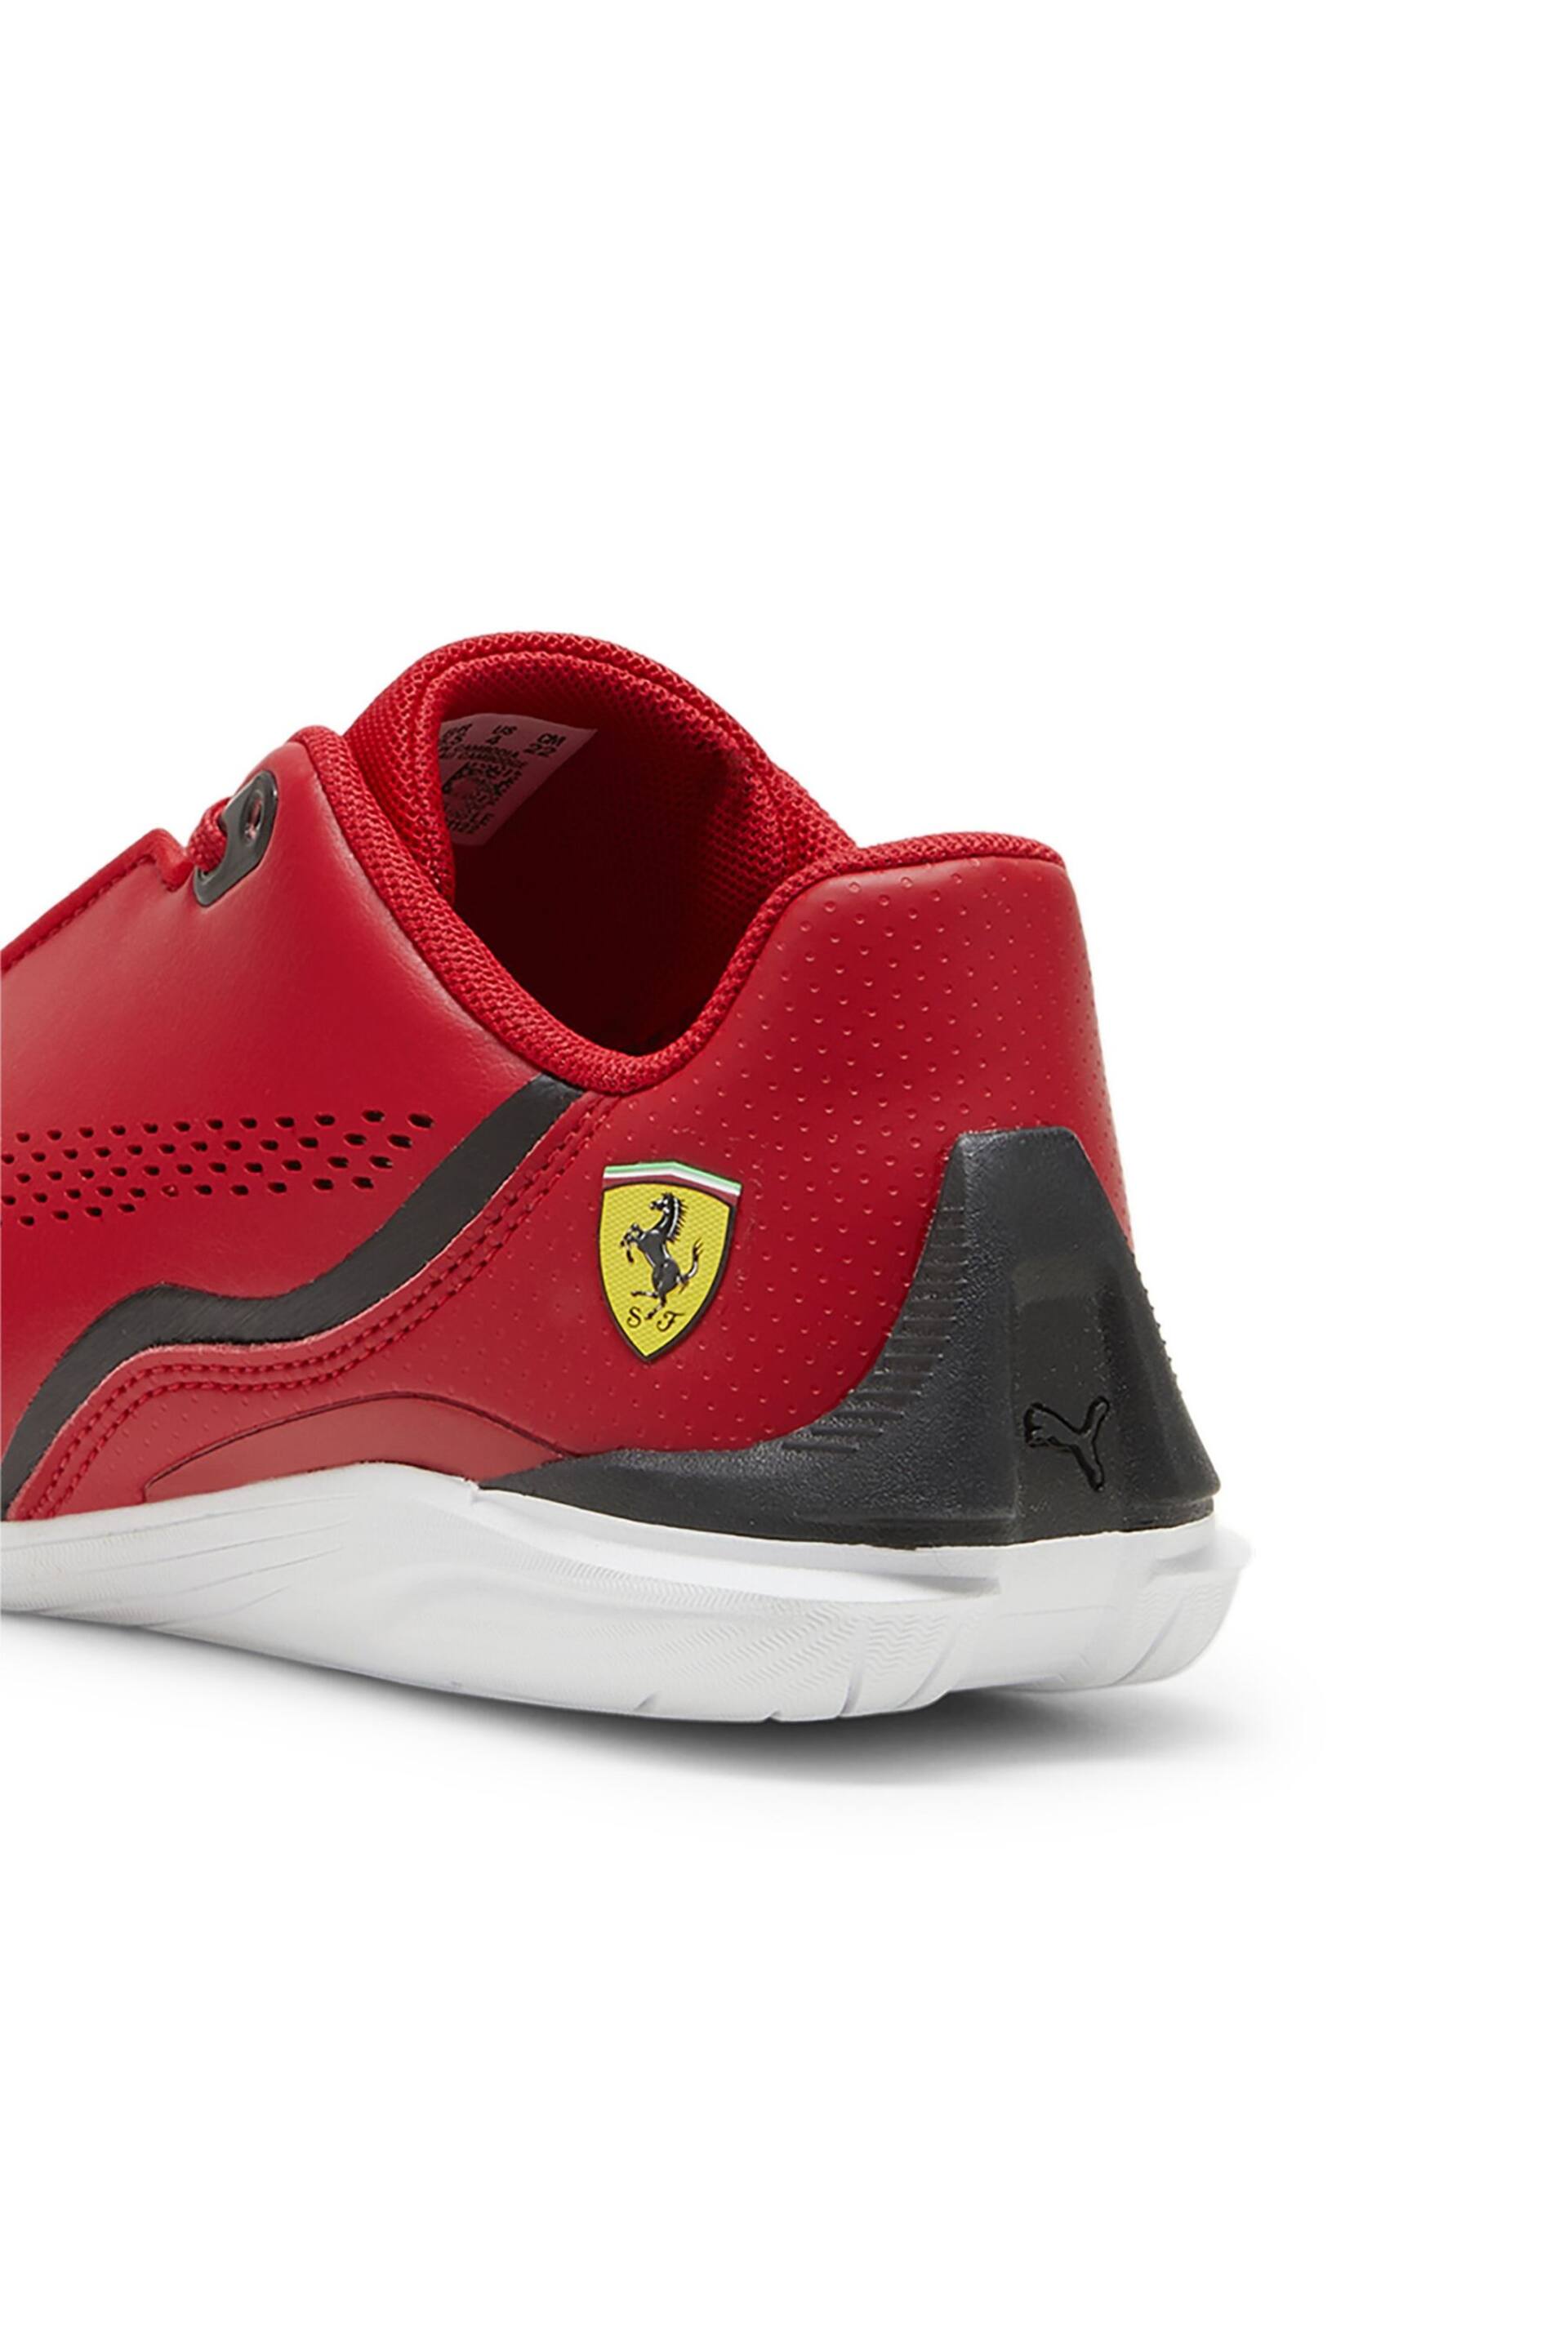 Puma Red Scuderia Ferrari Drift Cat Decima Motorsport Kids Shoes - Image 3 of 6